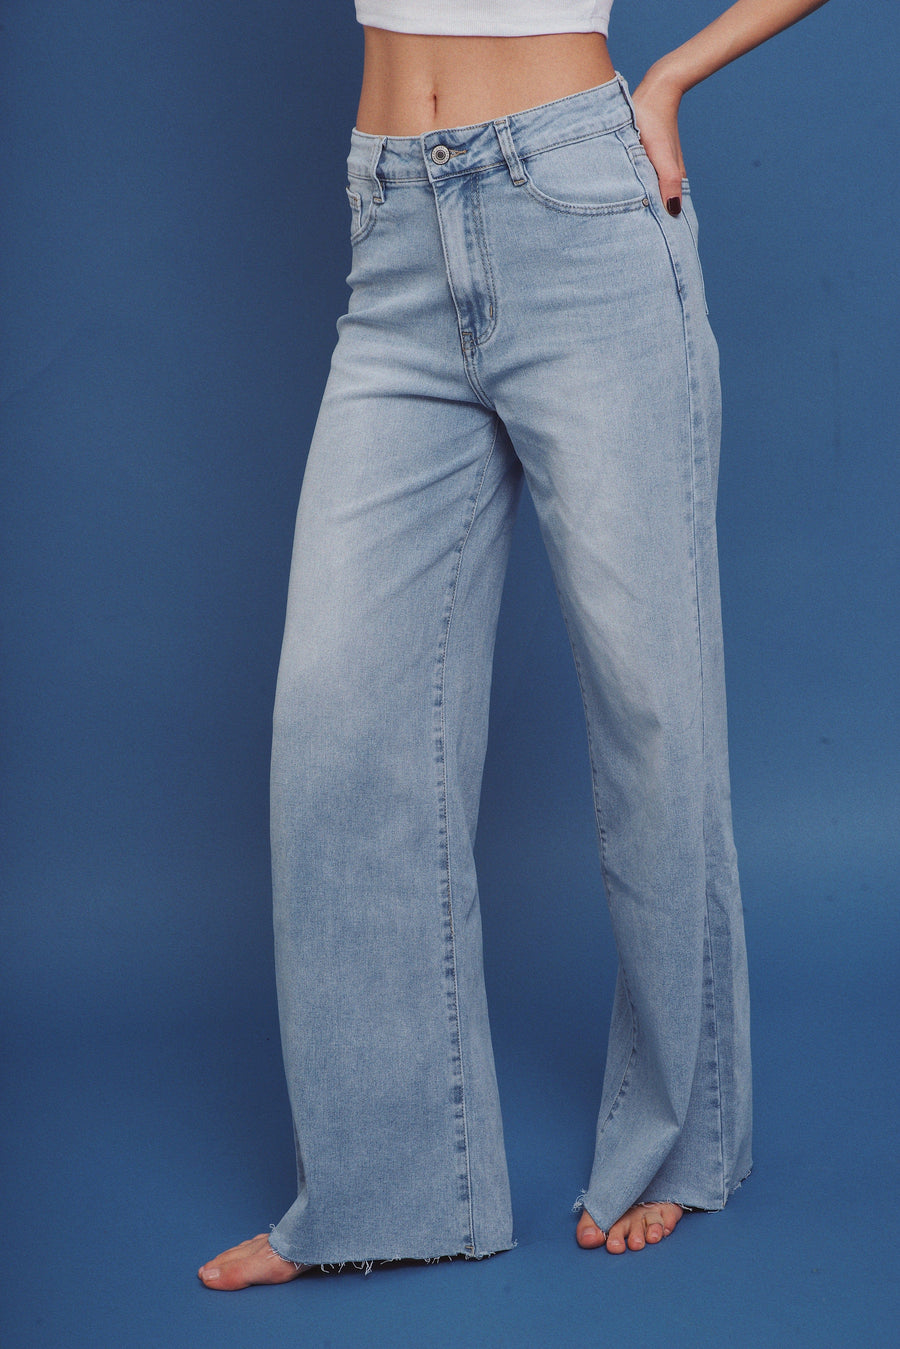 Hanks jeans